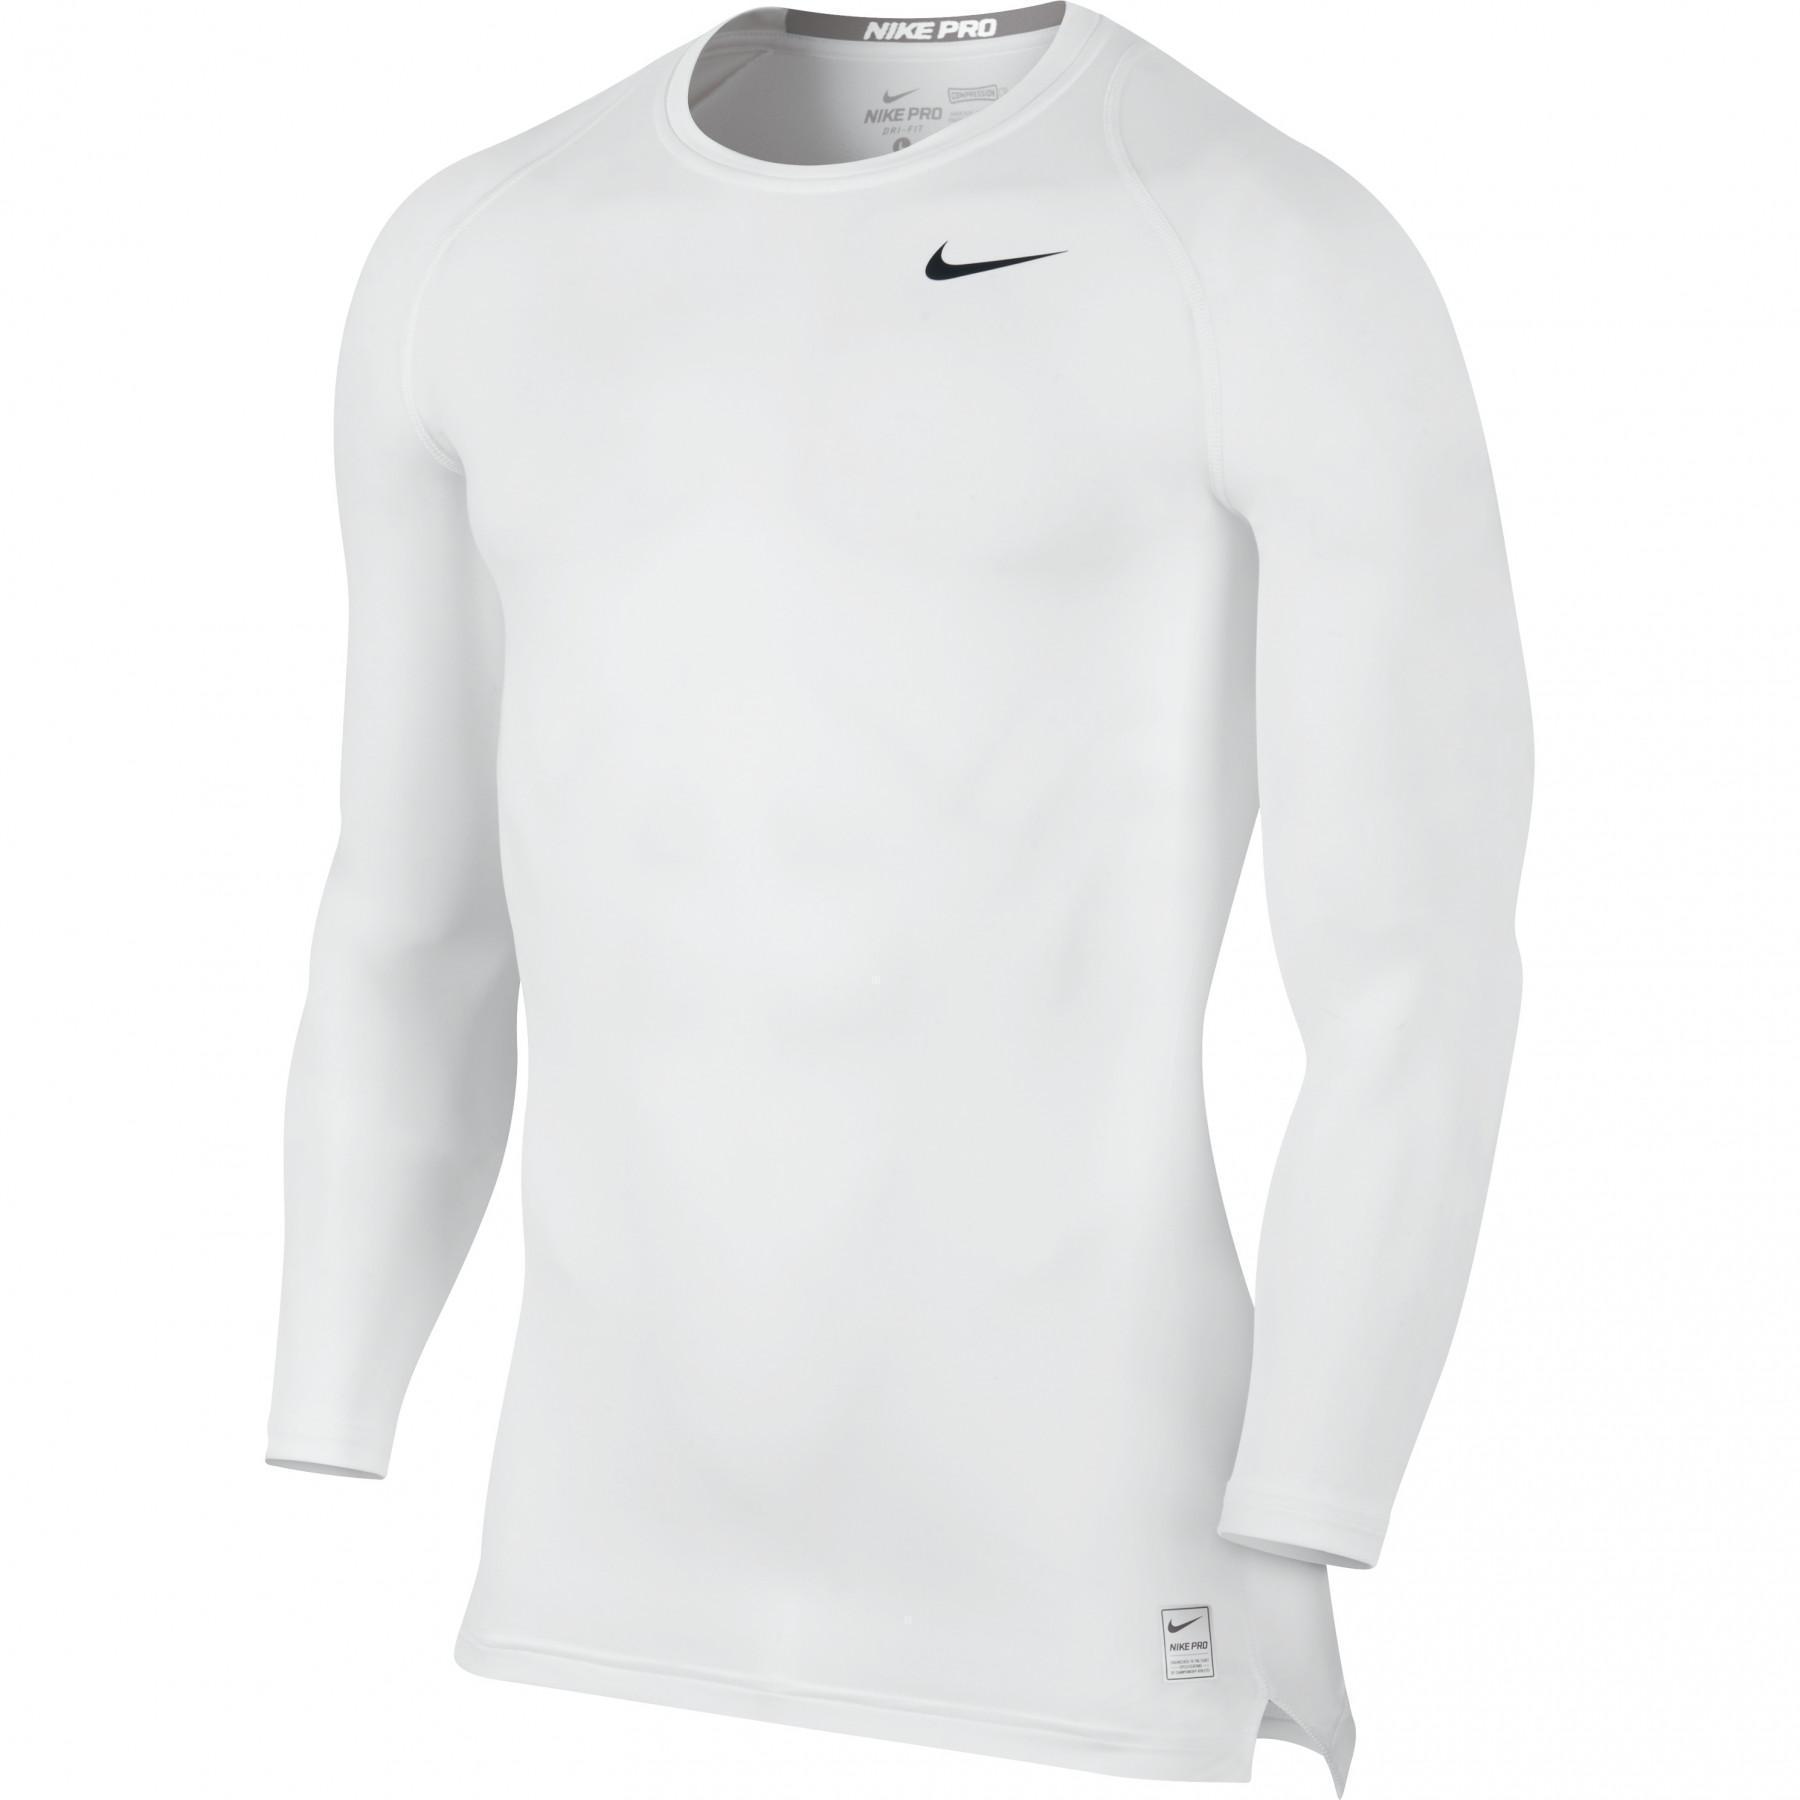 Long sleeve top. Nike Pro Compression long Sleeve. Nike Pro cool Compression. Nike Pro Dri Fit tight белая мужская футболка. Shirt Nike Pro Compression Nike Fit.